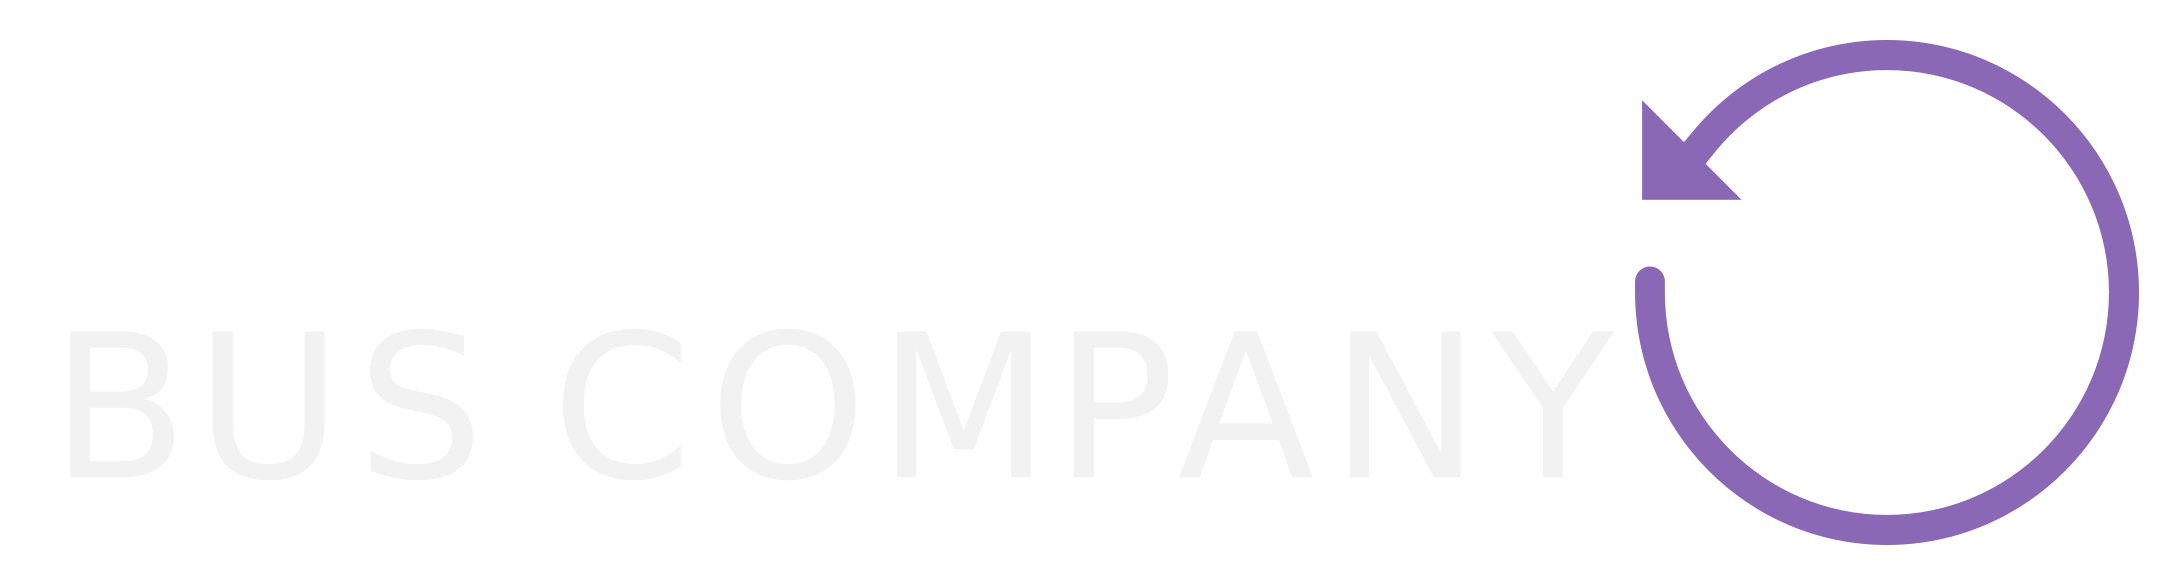 canberra-bus-company-logo